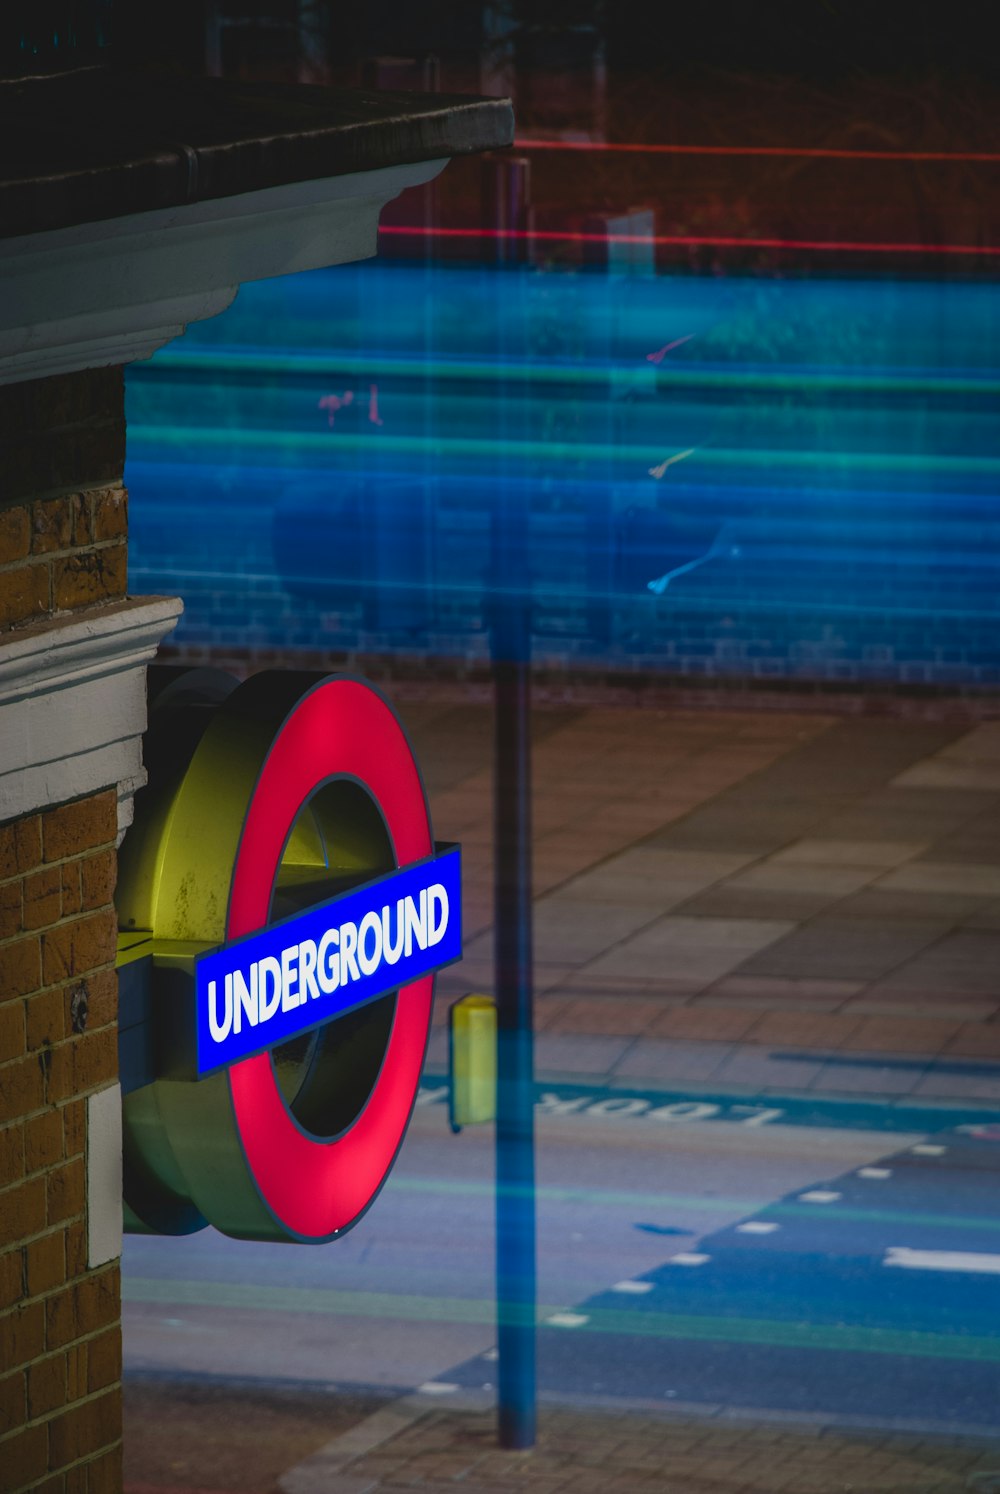 Underground signage with lights turned on